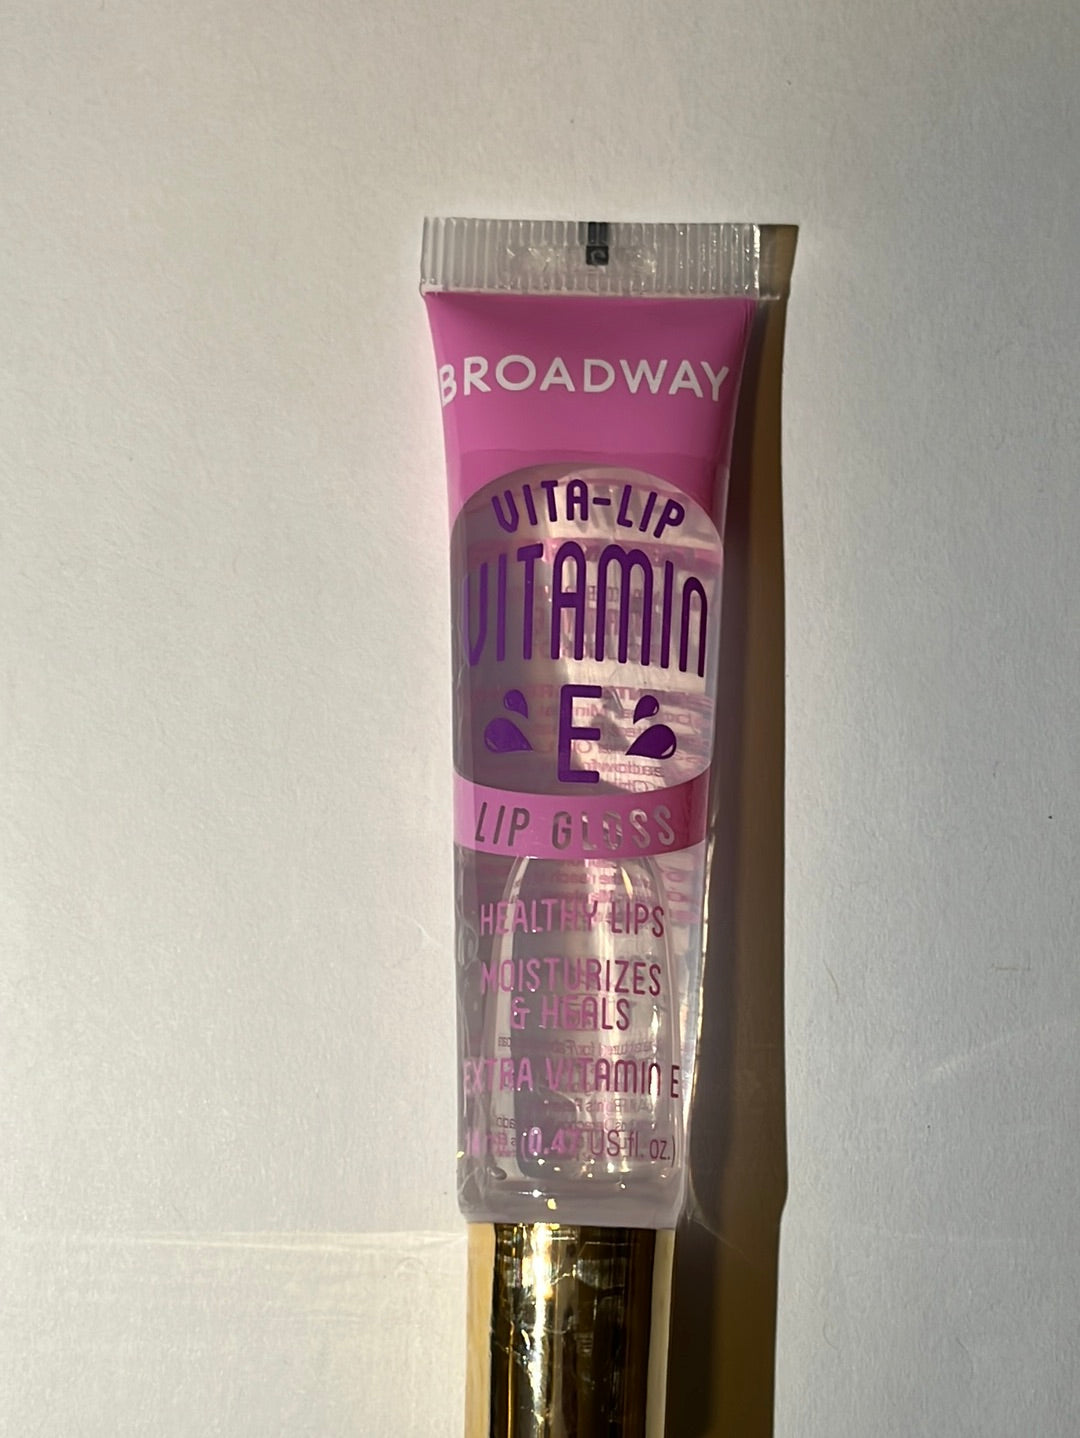 Broadway Vitamin E Lip Gloss